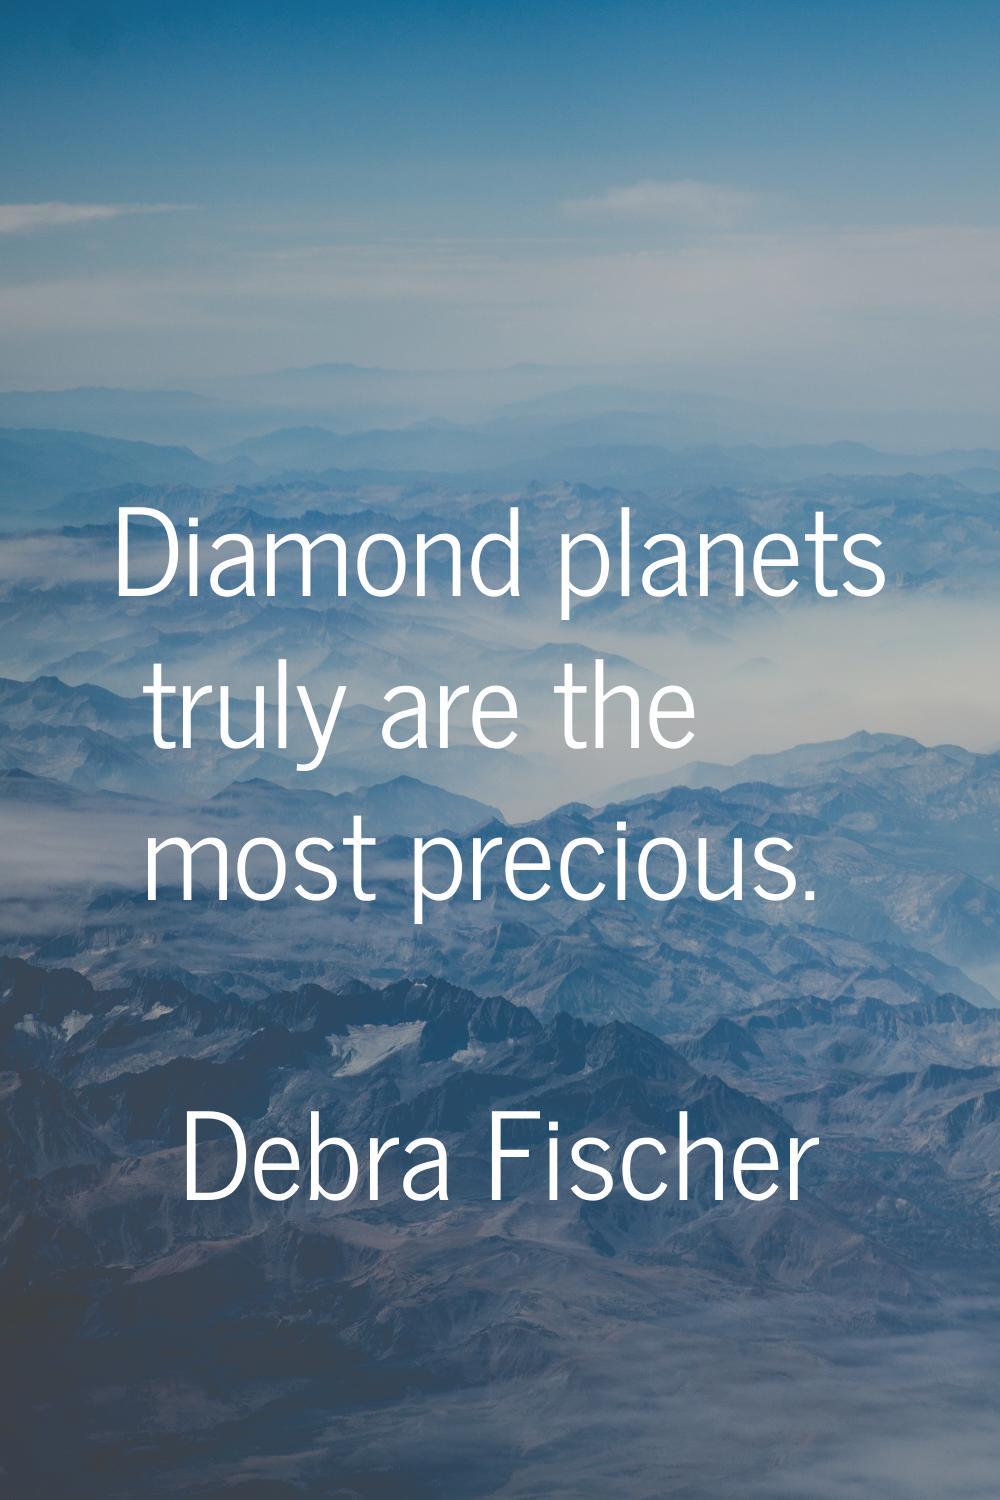 Diamond planets truly are the most precious.